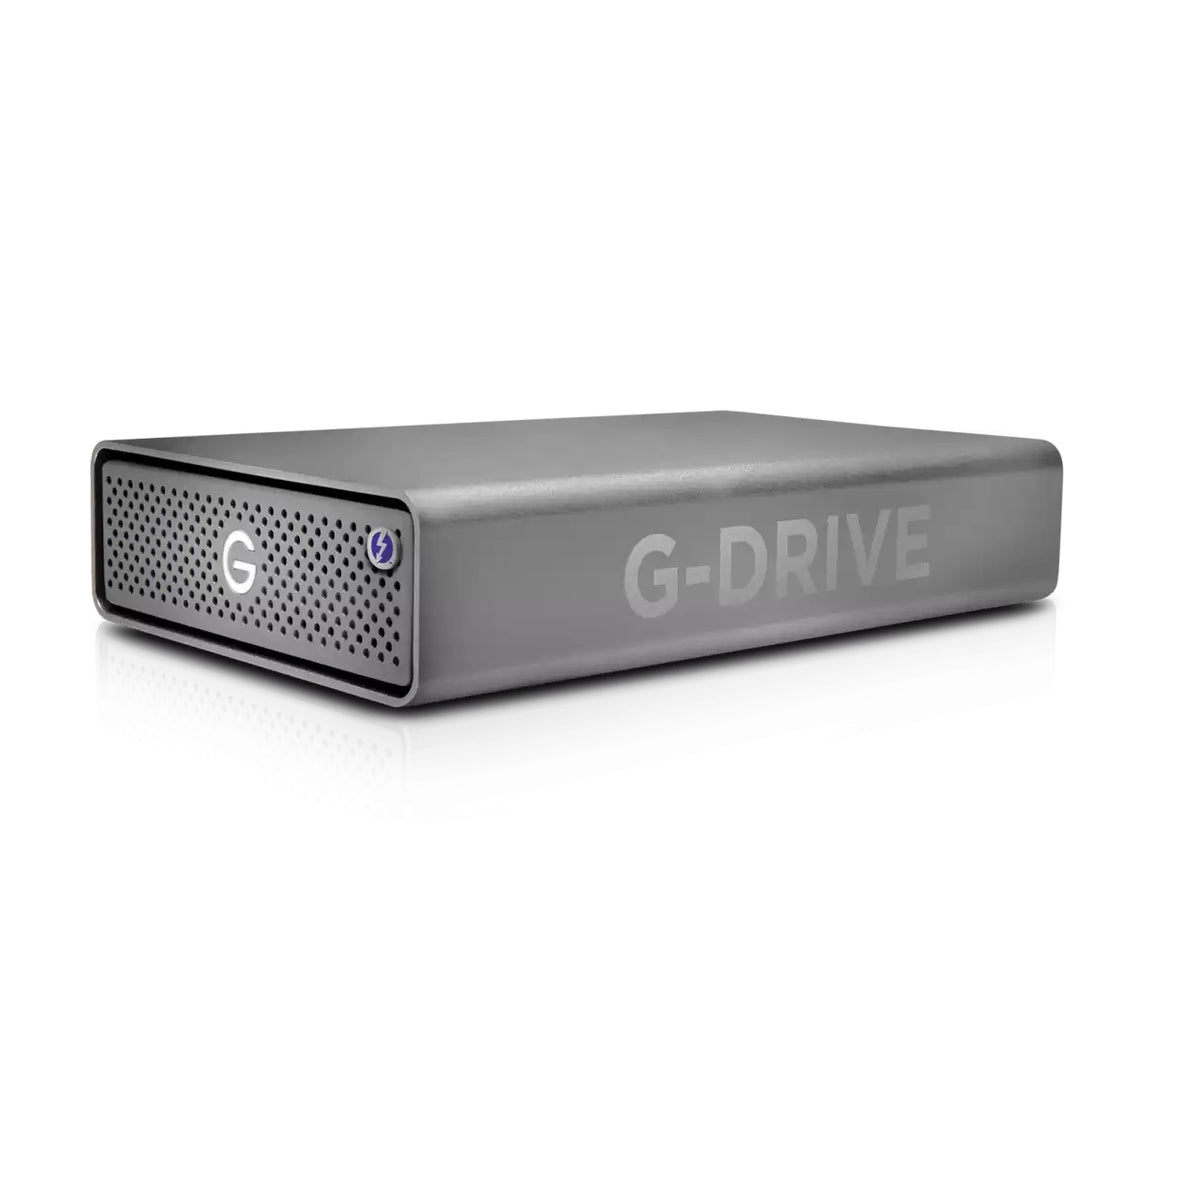 SanDisk Professional G-DRIVE PRO STUDIO - SSD - 7.68 TB - externa (desktop) - Thunderbolt 3 (USB C conector) - cinzento espaço